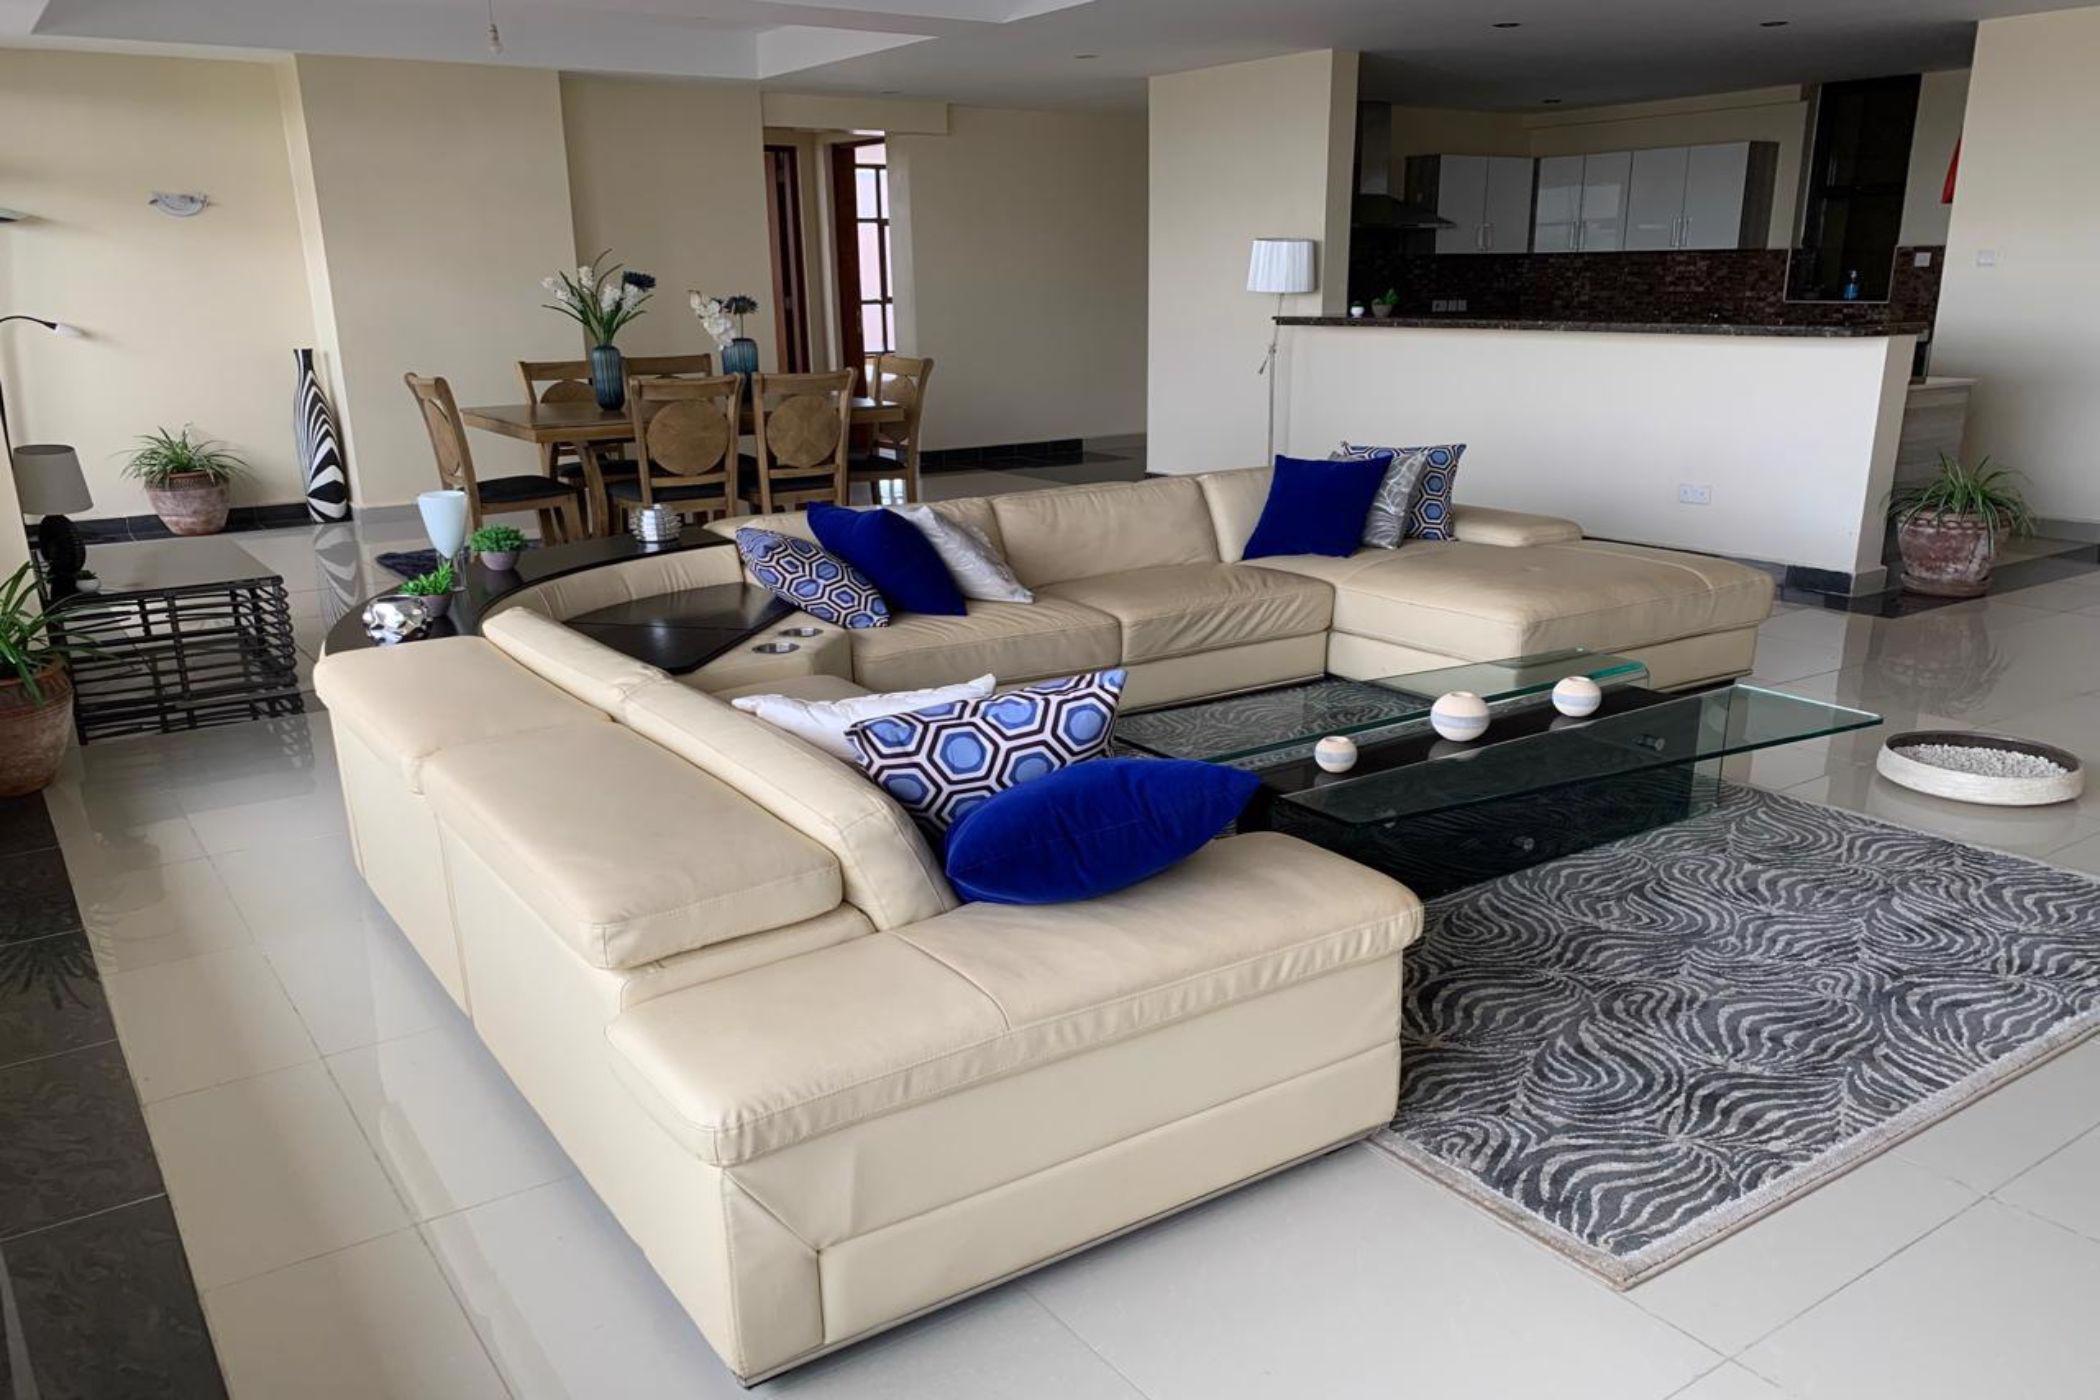 4 bedroom penthouse apartment to rent in Westlands (Kenya)